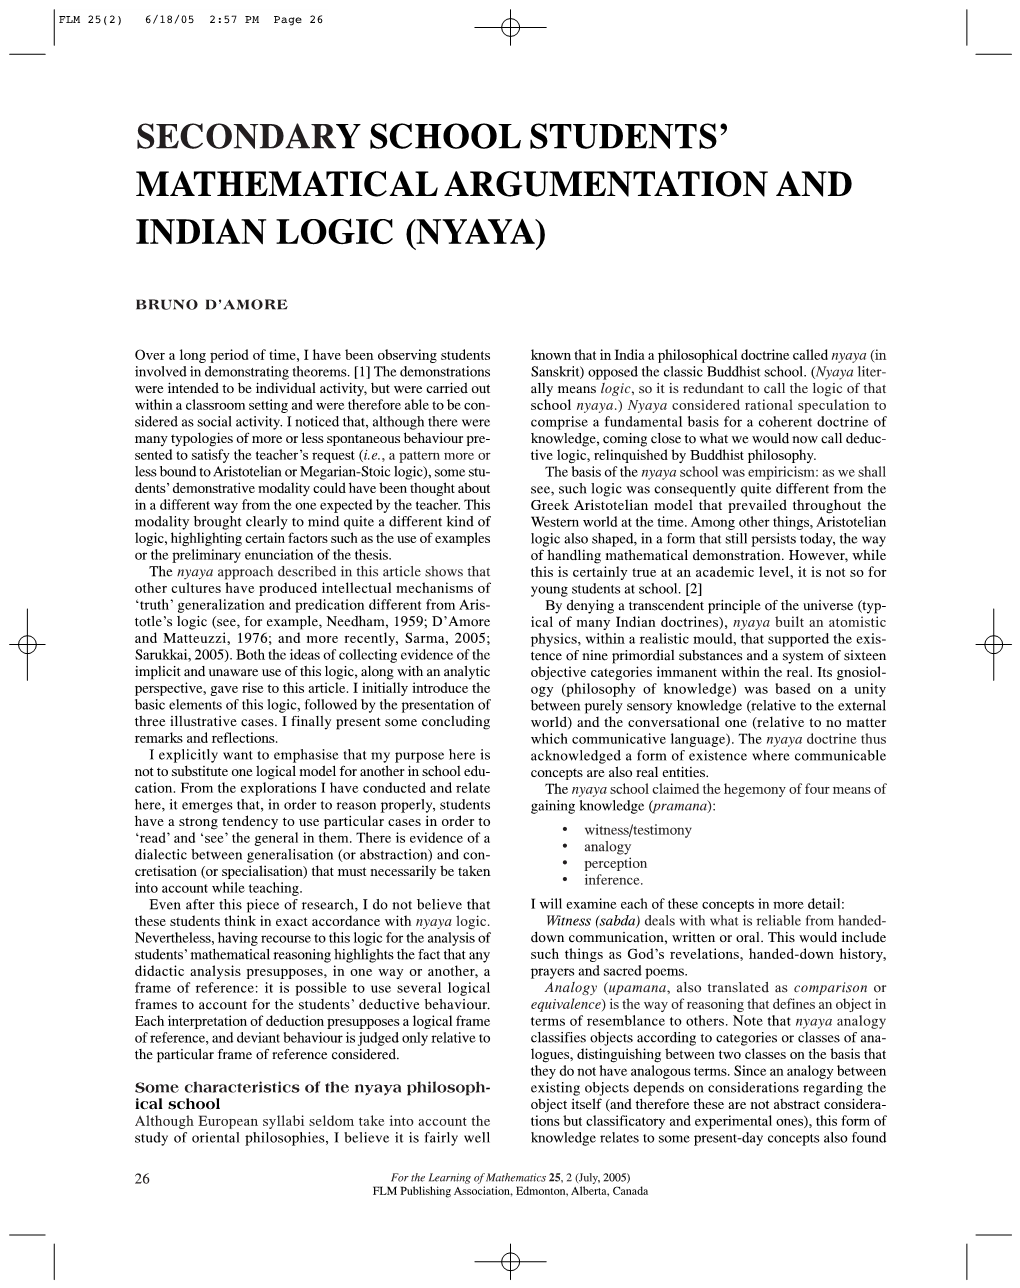 Mathematical Argumentation and Indian Logic (Nyaya)